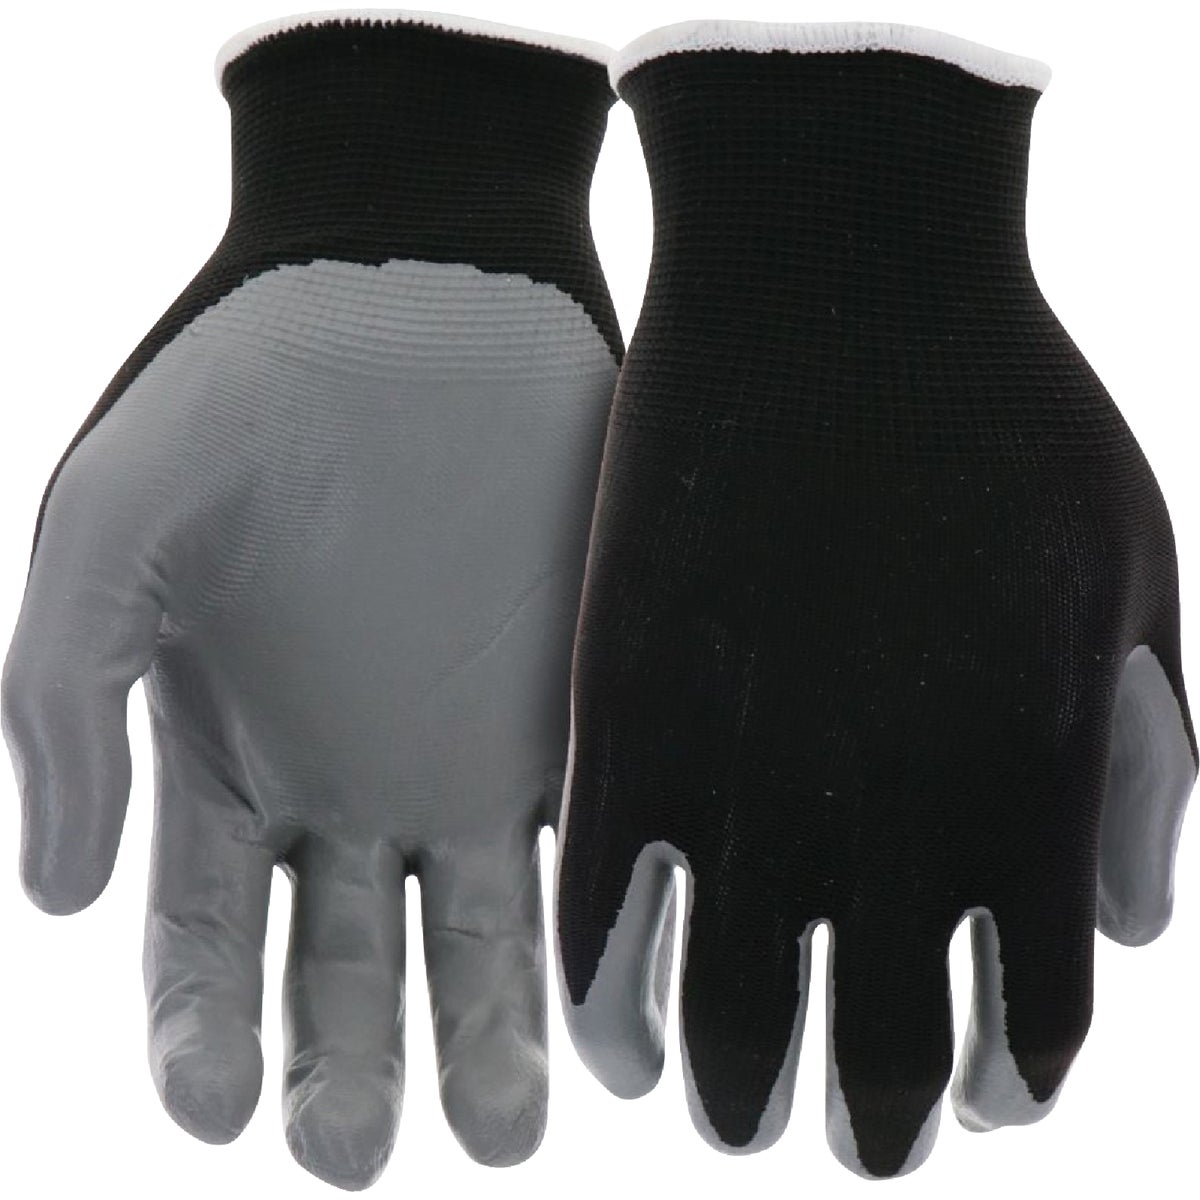 Do it Best Men's Medium Nitrile Coated Glove, Black & Gray